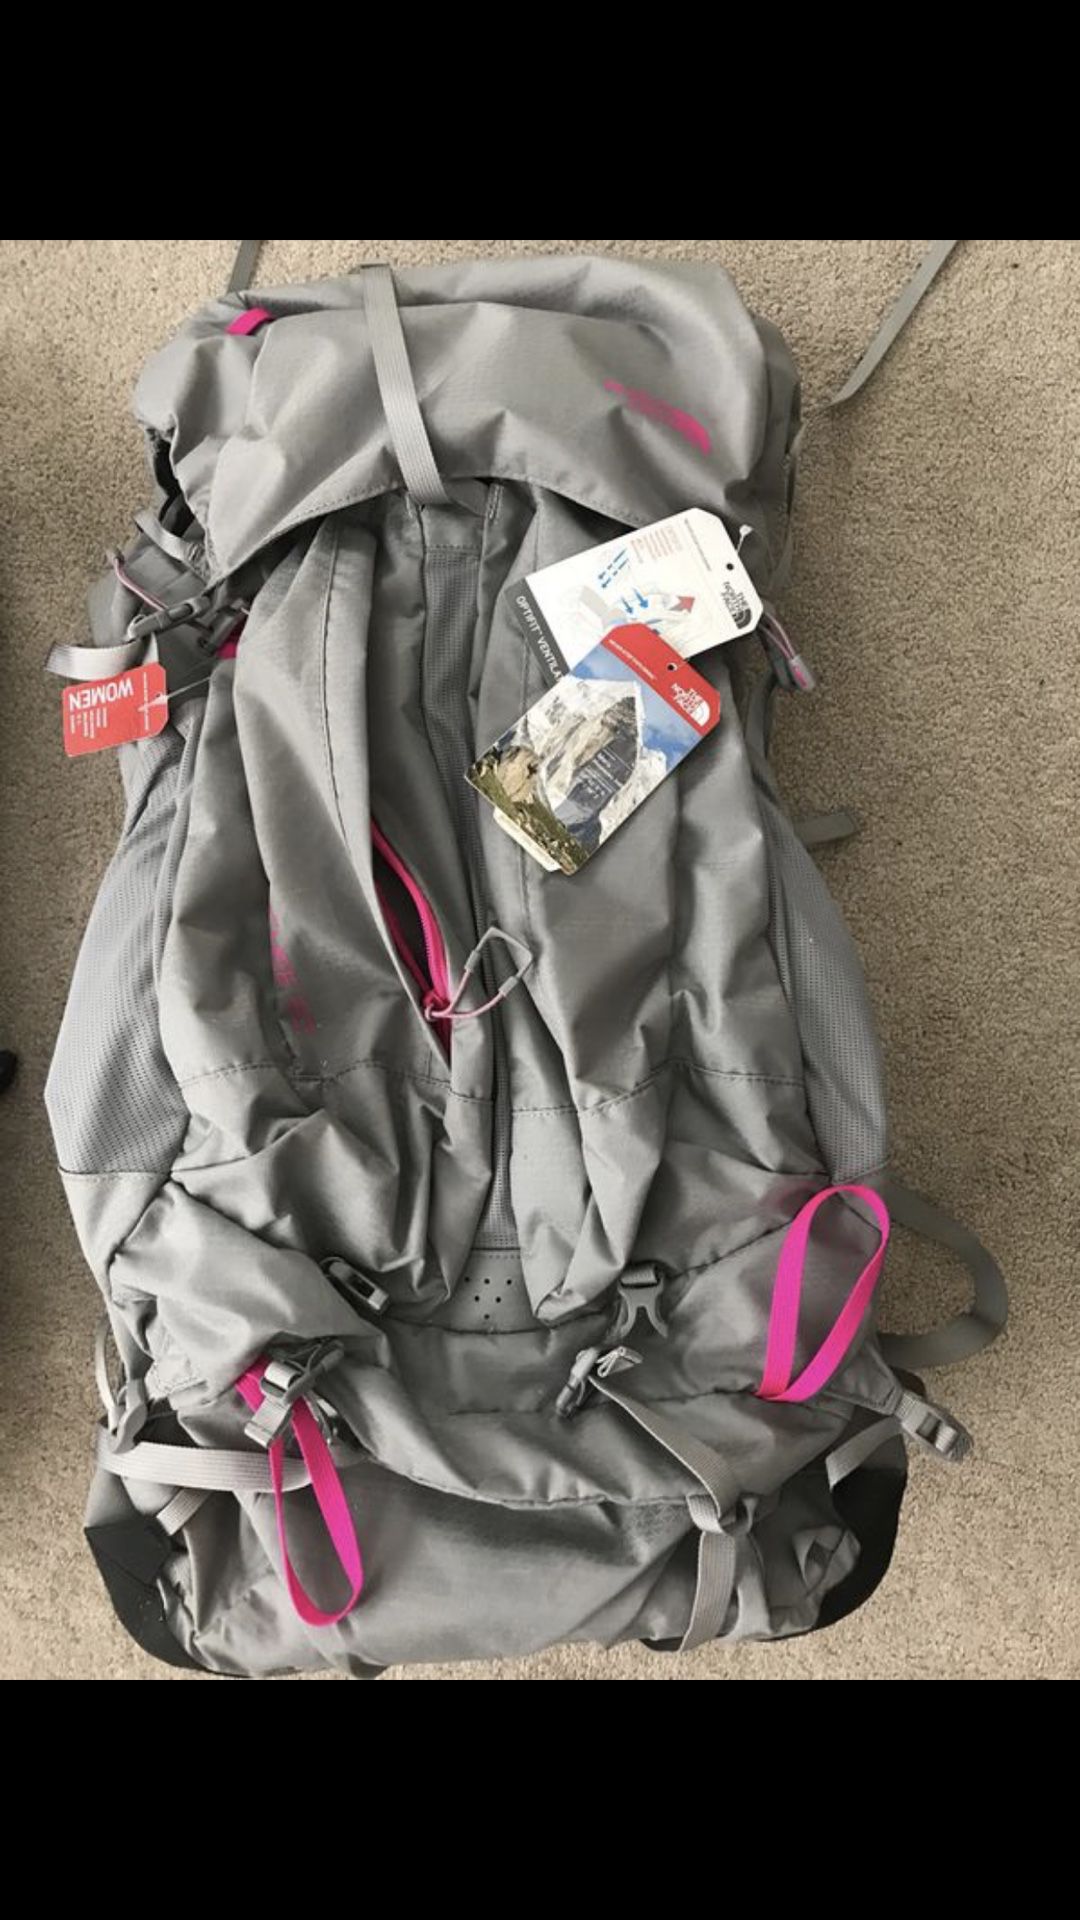 North Face Banshee 50 women’s hiking backpack